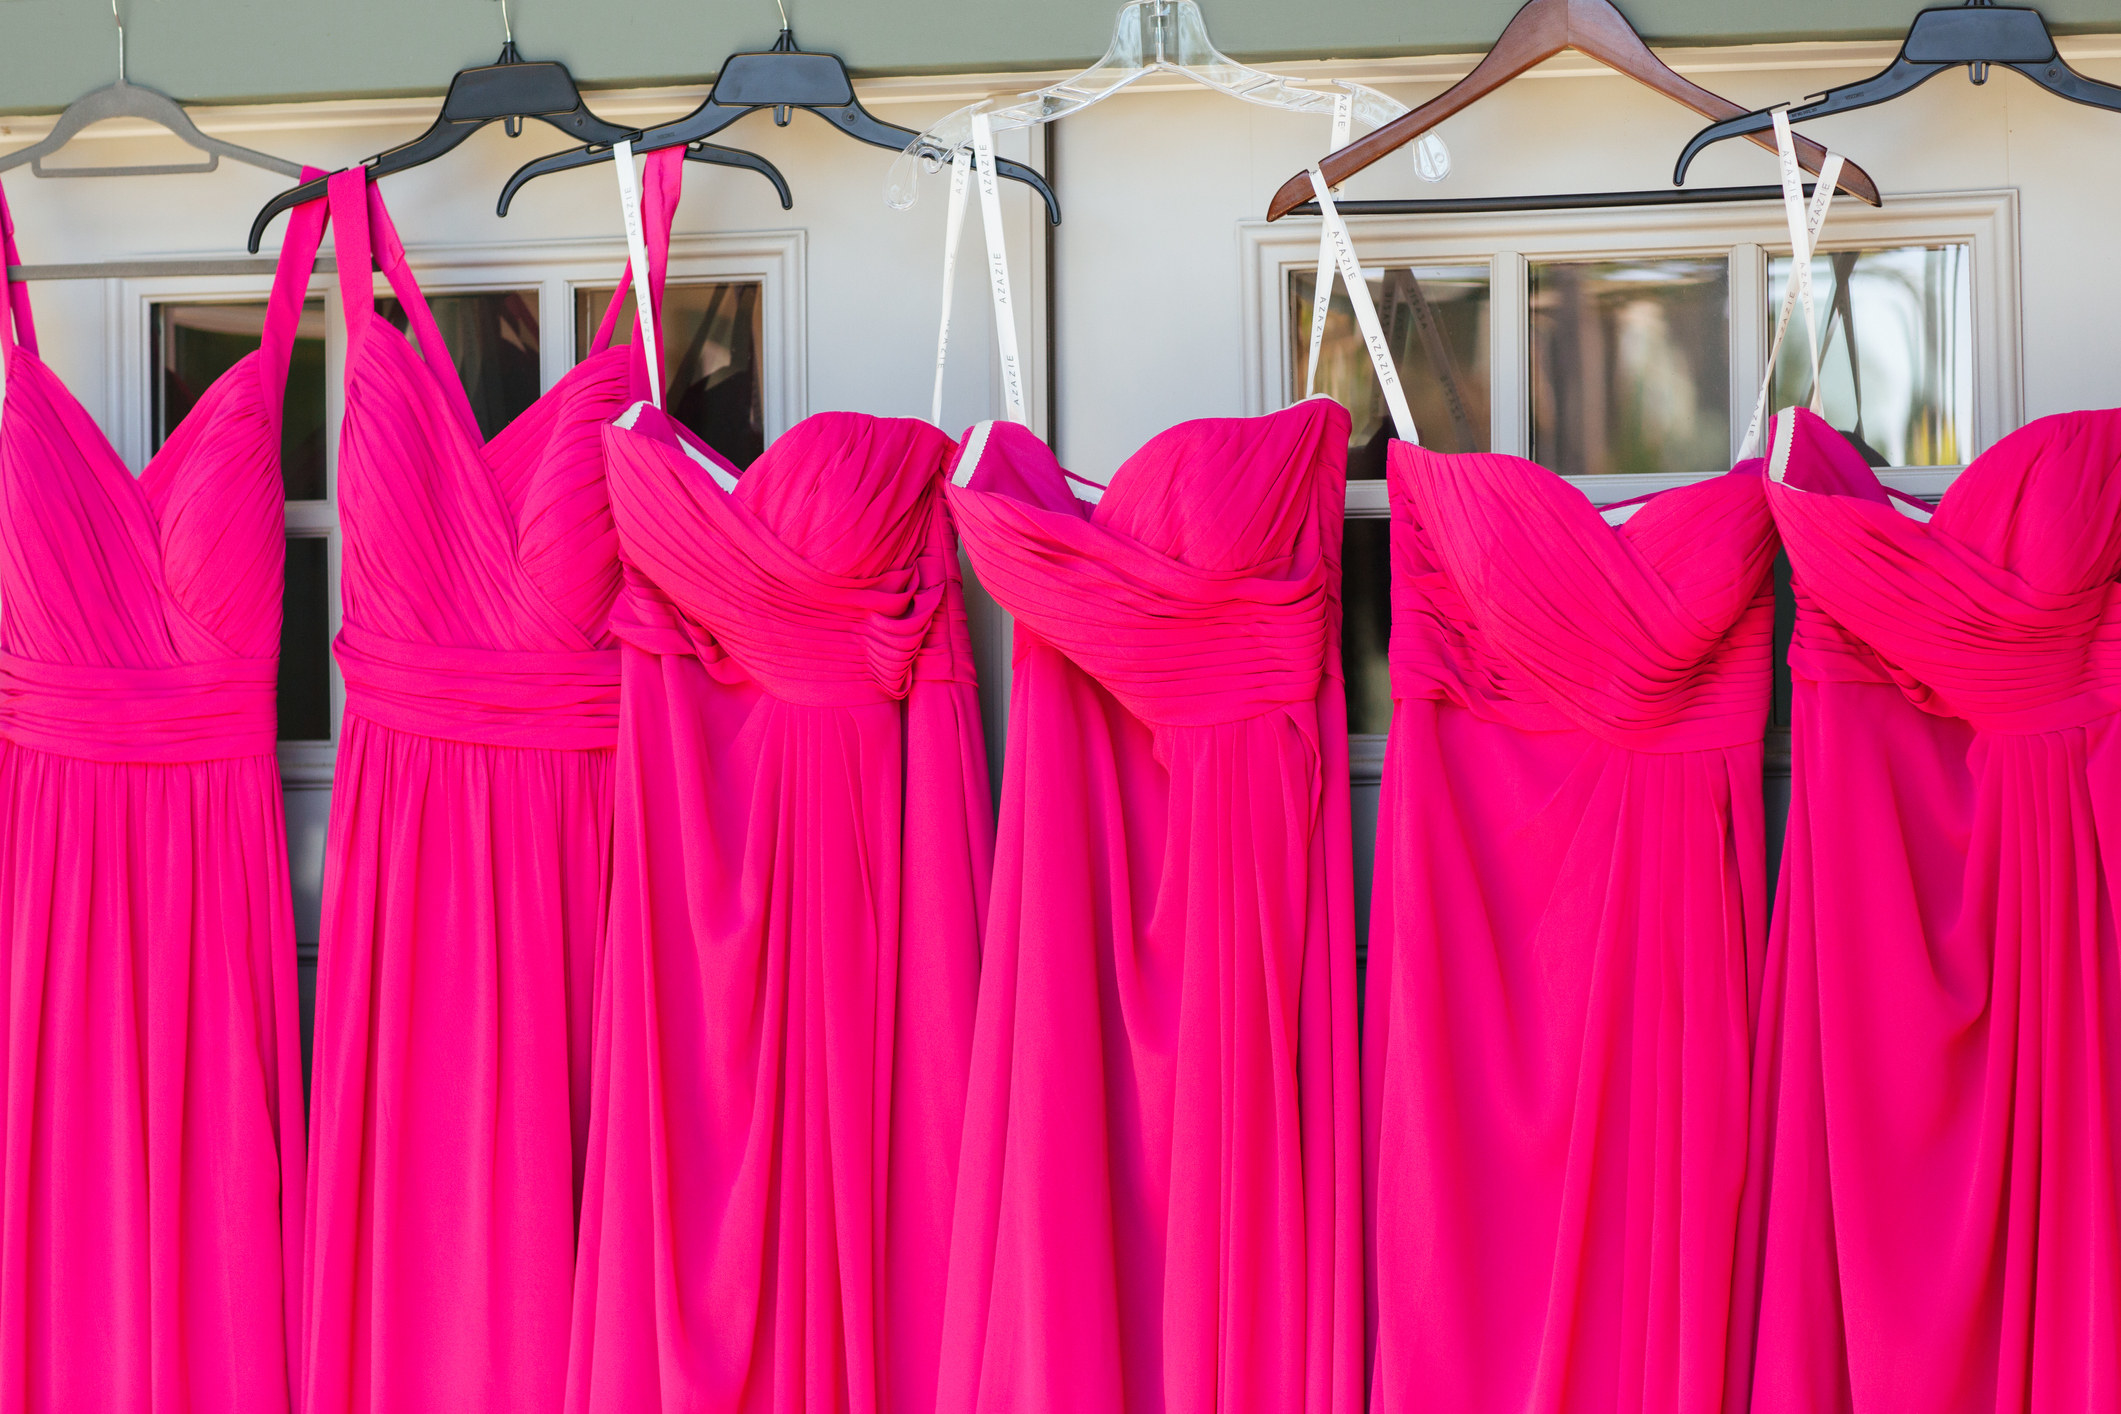 dresses on hangers